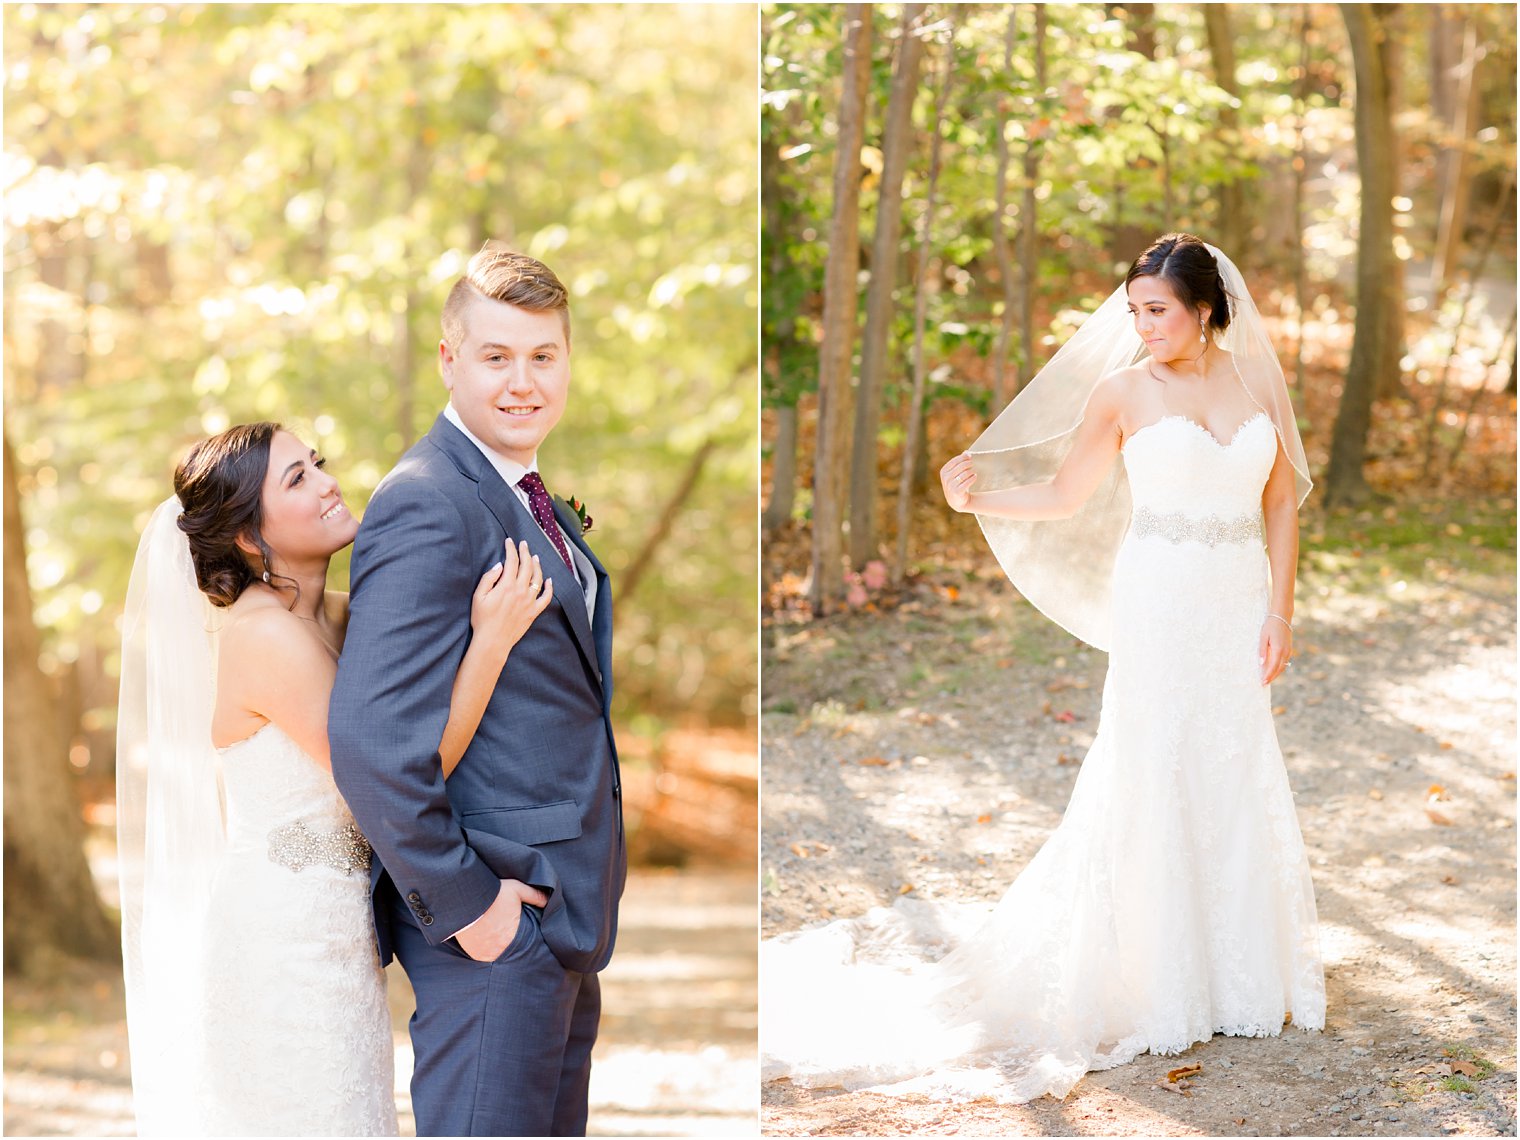 Bride and groom photos at Hedden Park | Photos by NJ Wedding Photographers Idalia Photography